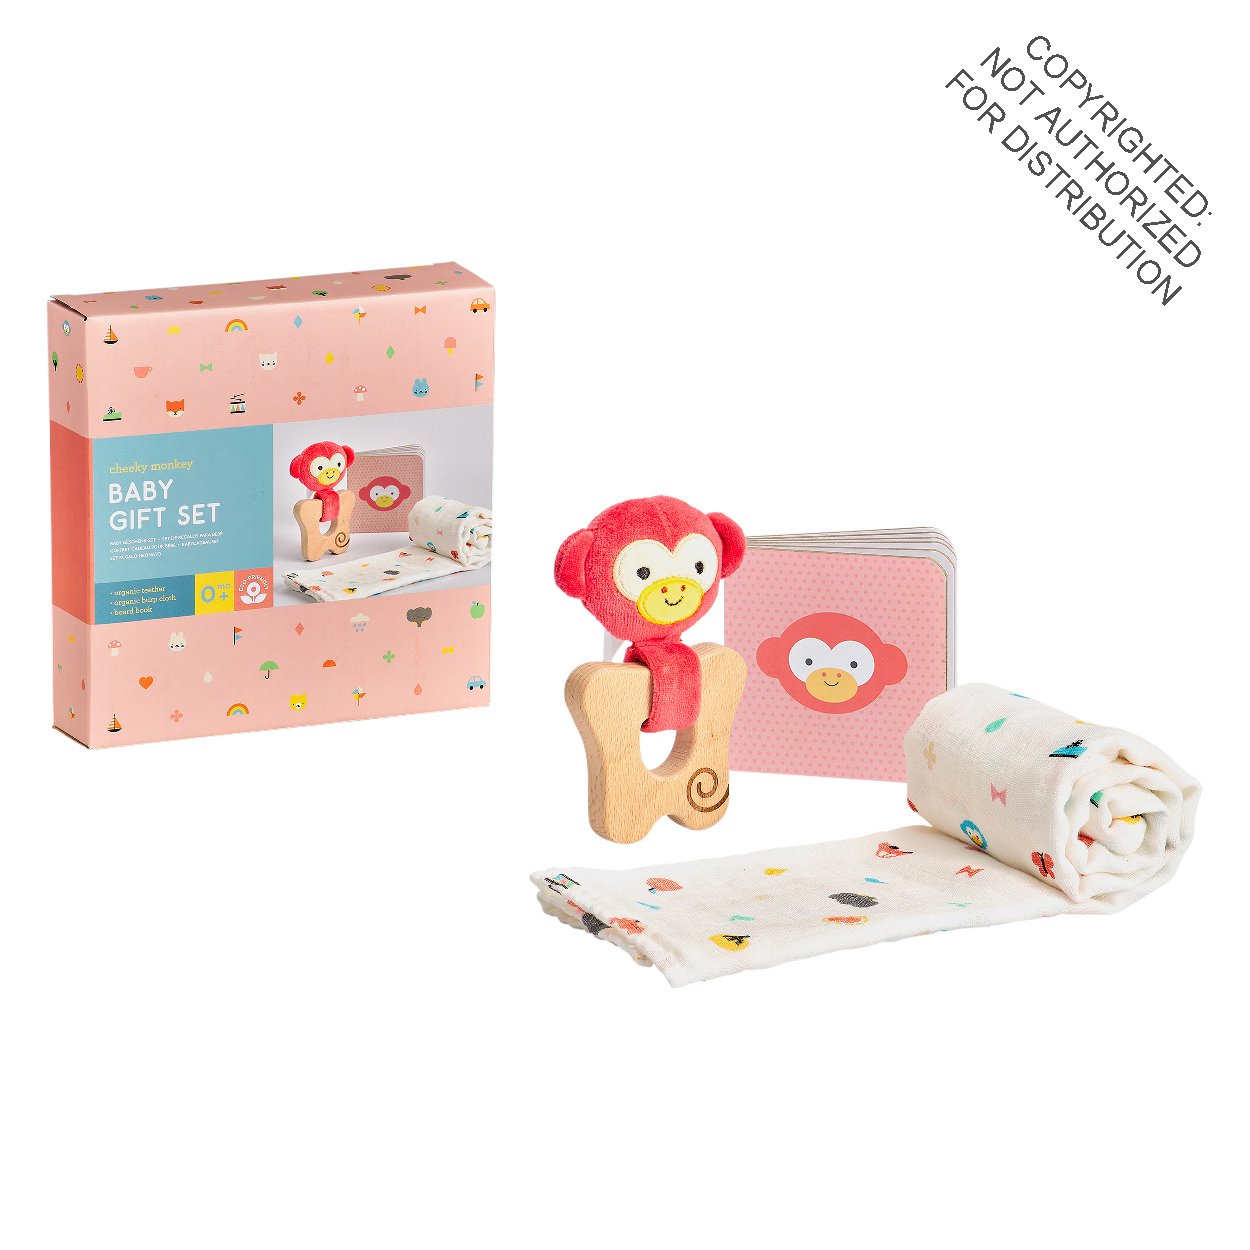 Cheeky Monkey Baby Gift Set